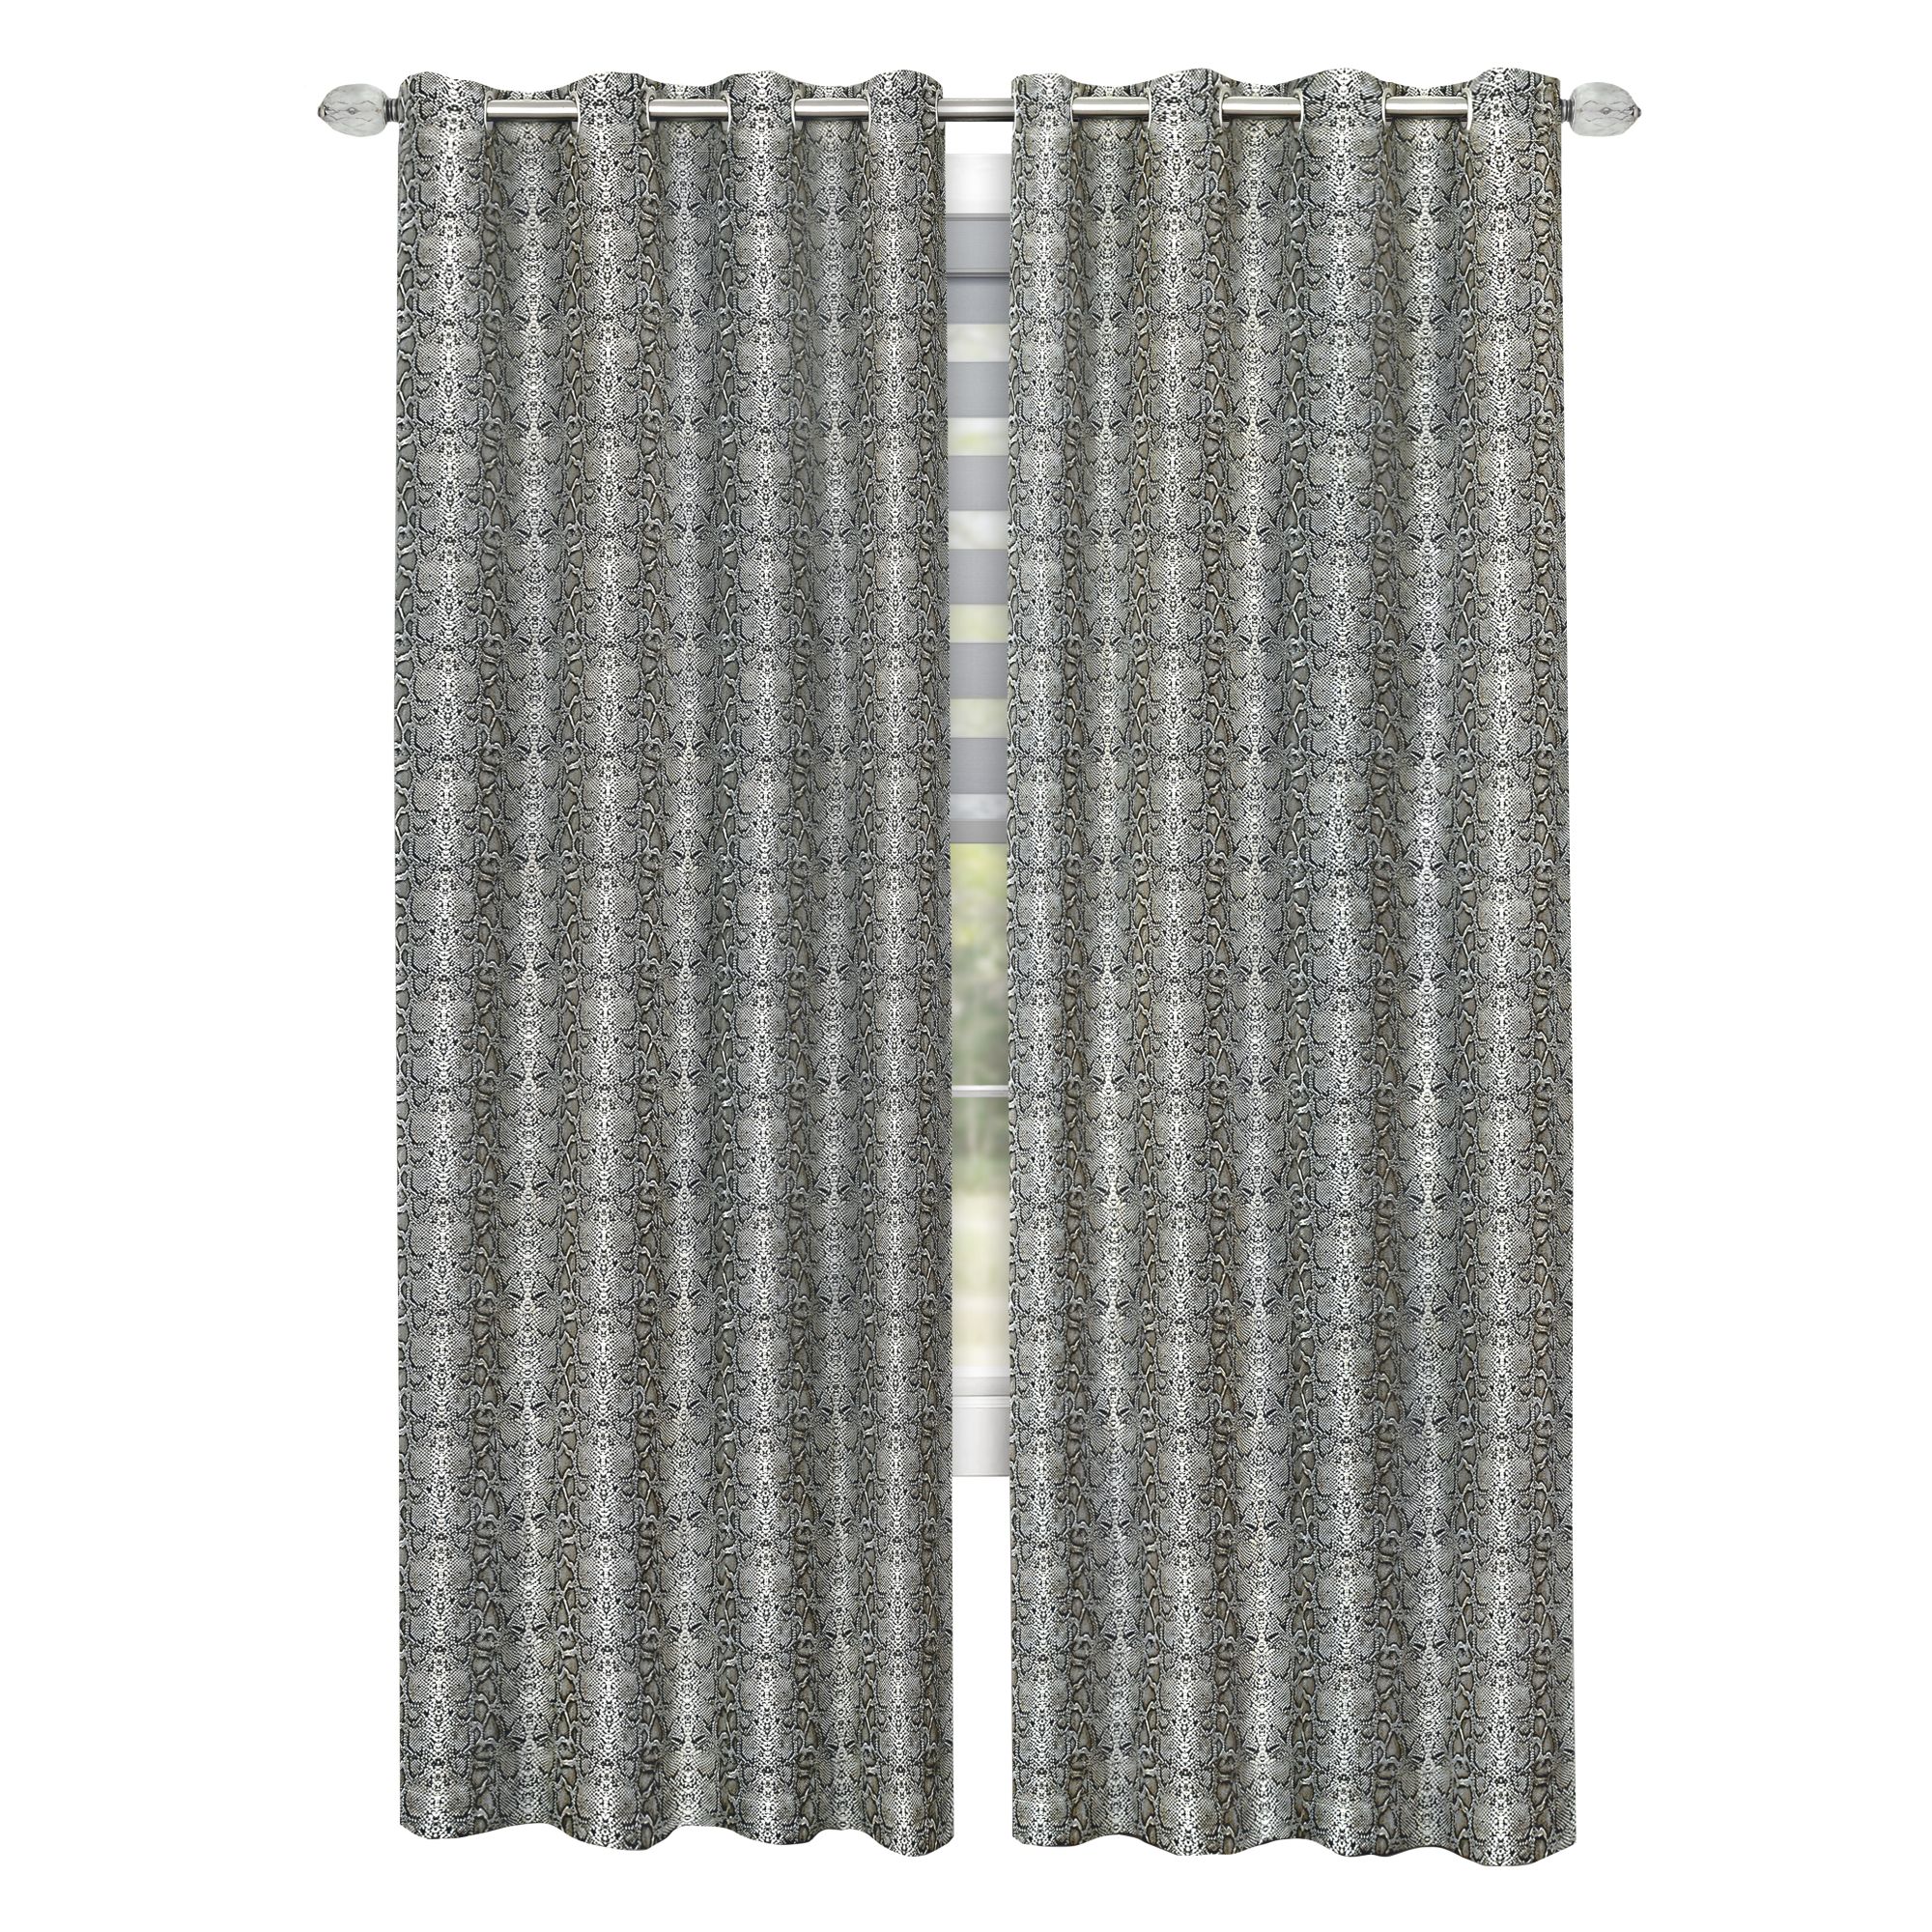 Achim Python Polyester Blackout Window Curtain Panel, Black/Silver, 52" x 63" - image 2 of 5